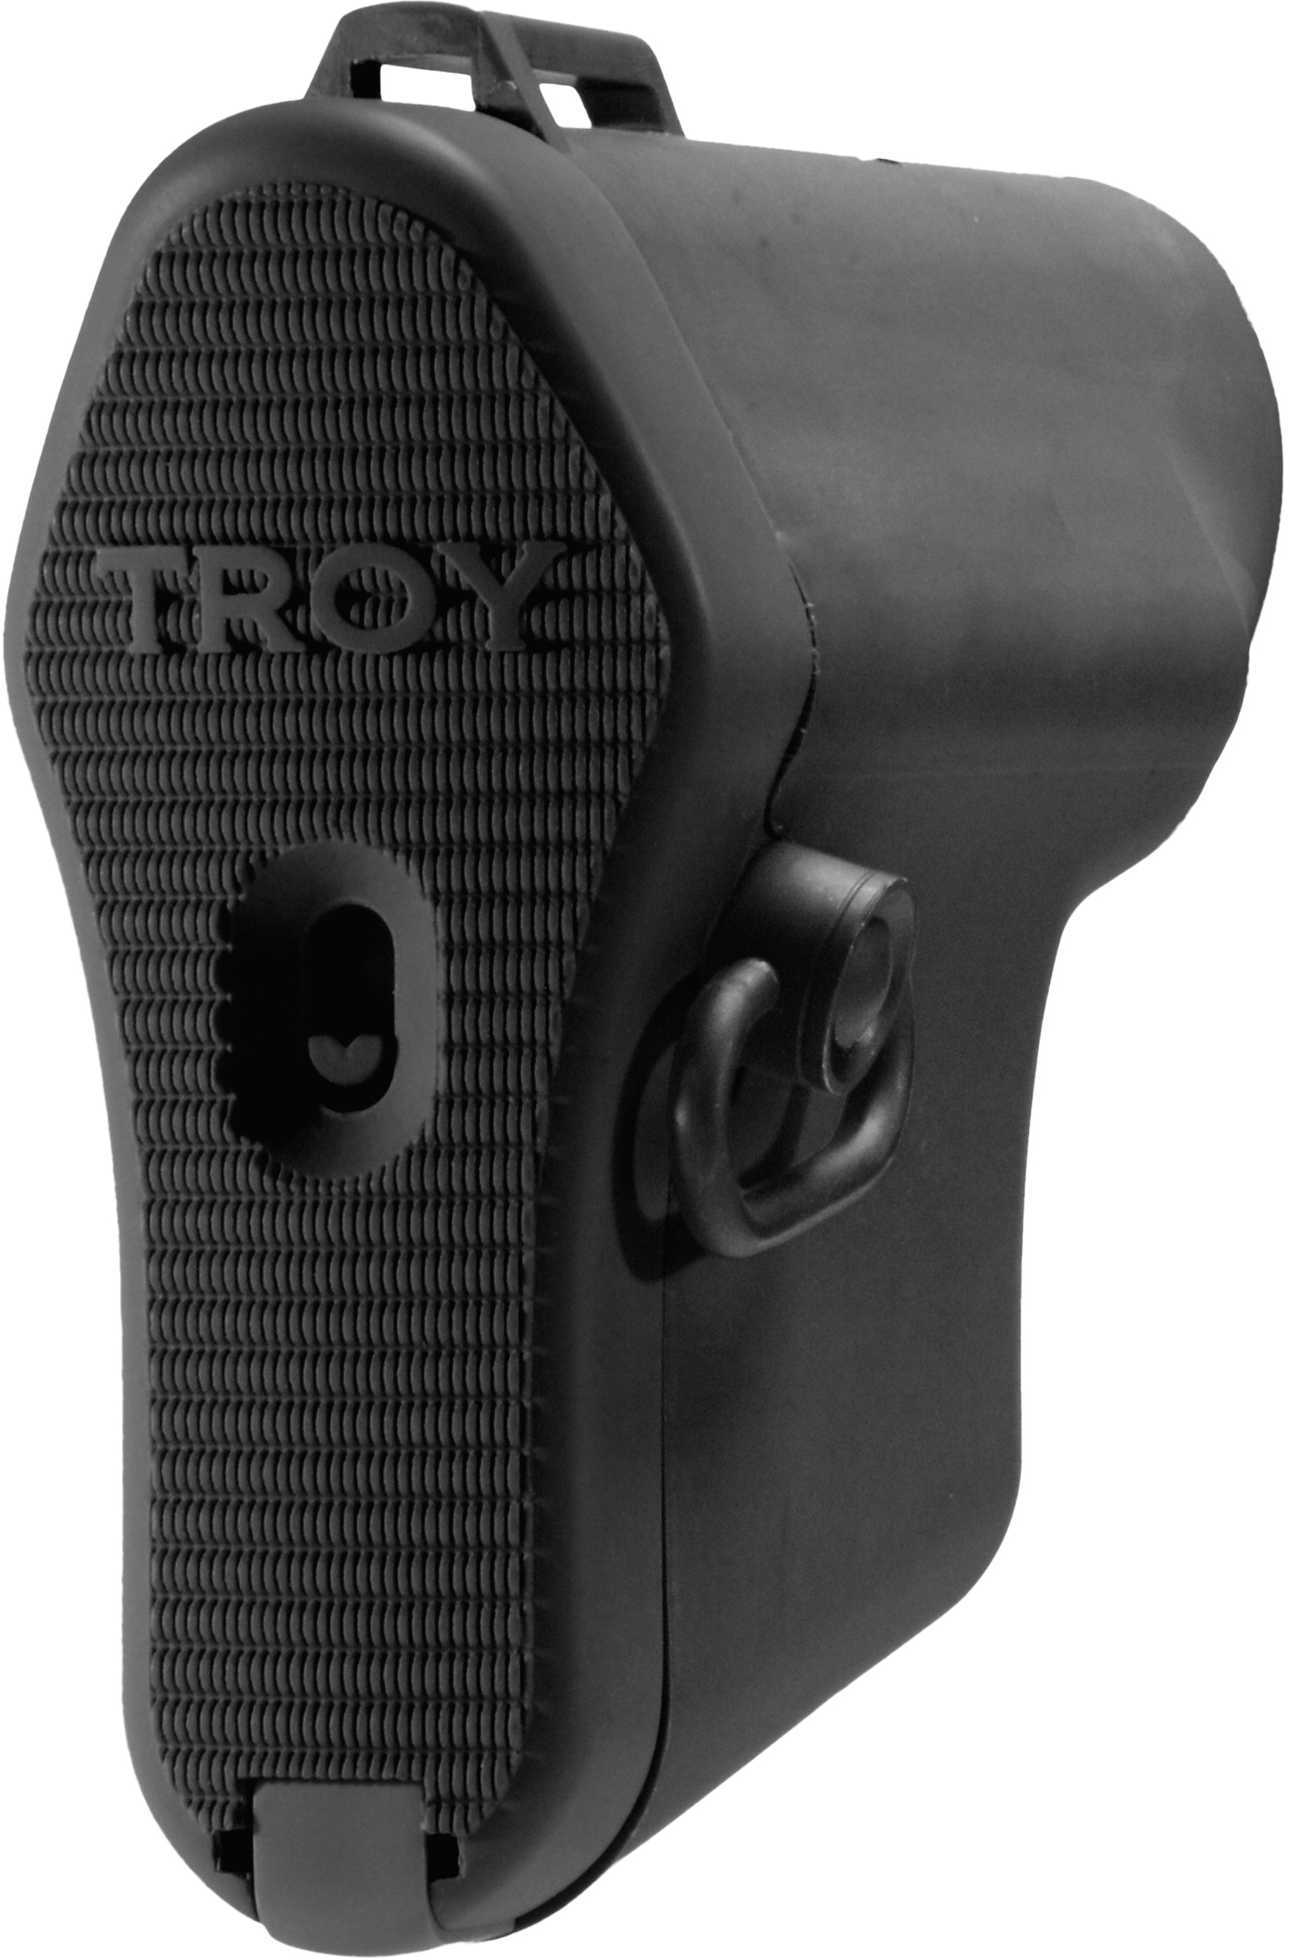 Troy Industries Lightweight Battle Ax CQB Stock - Black Only SBUT-LW1-00BT-00